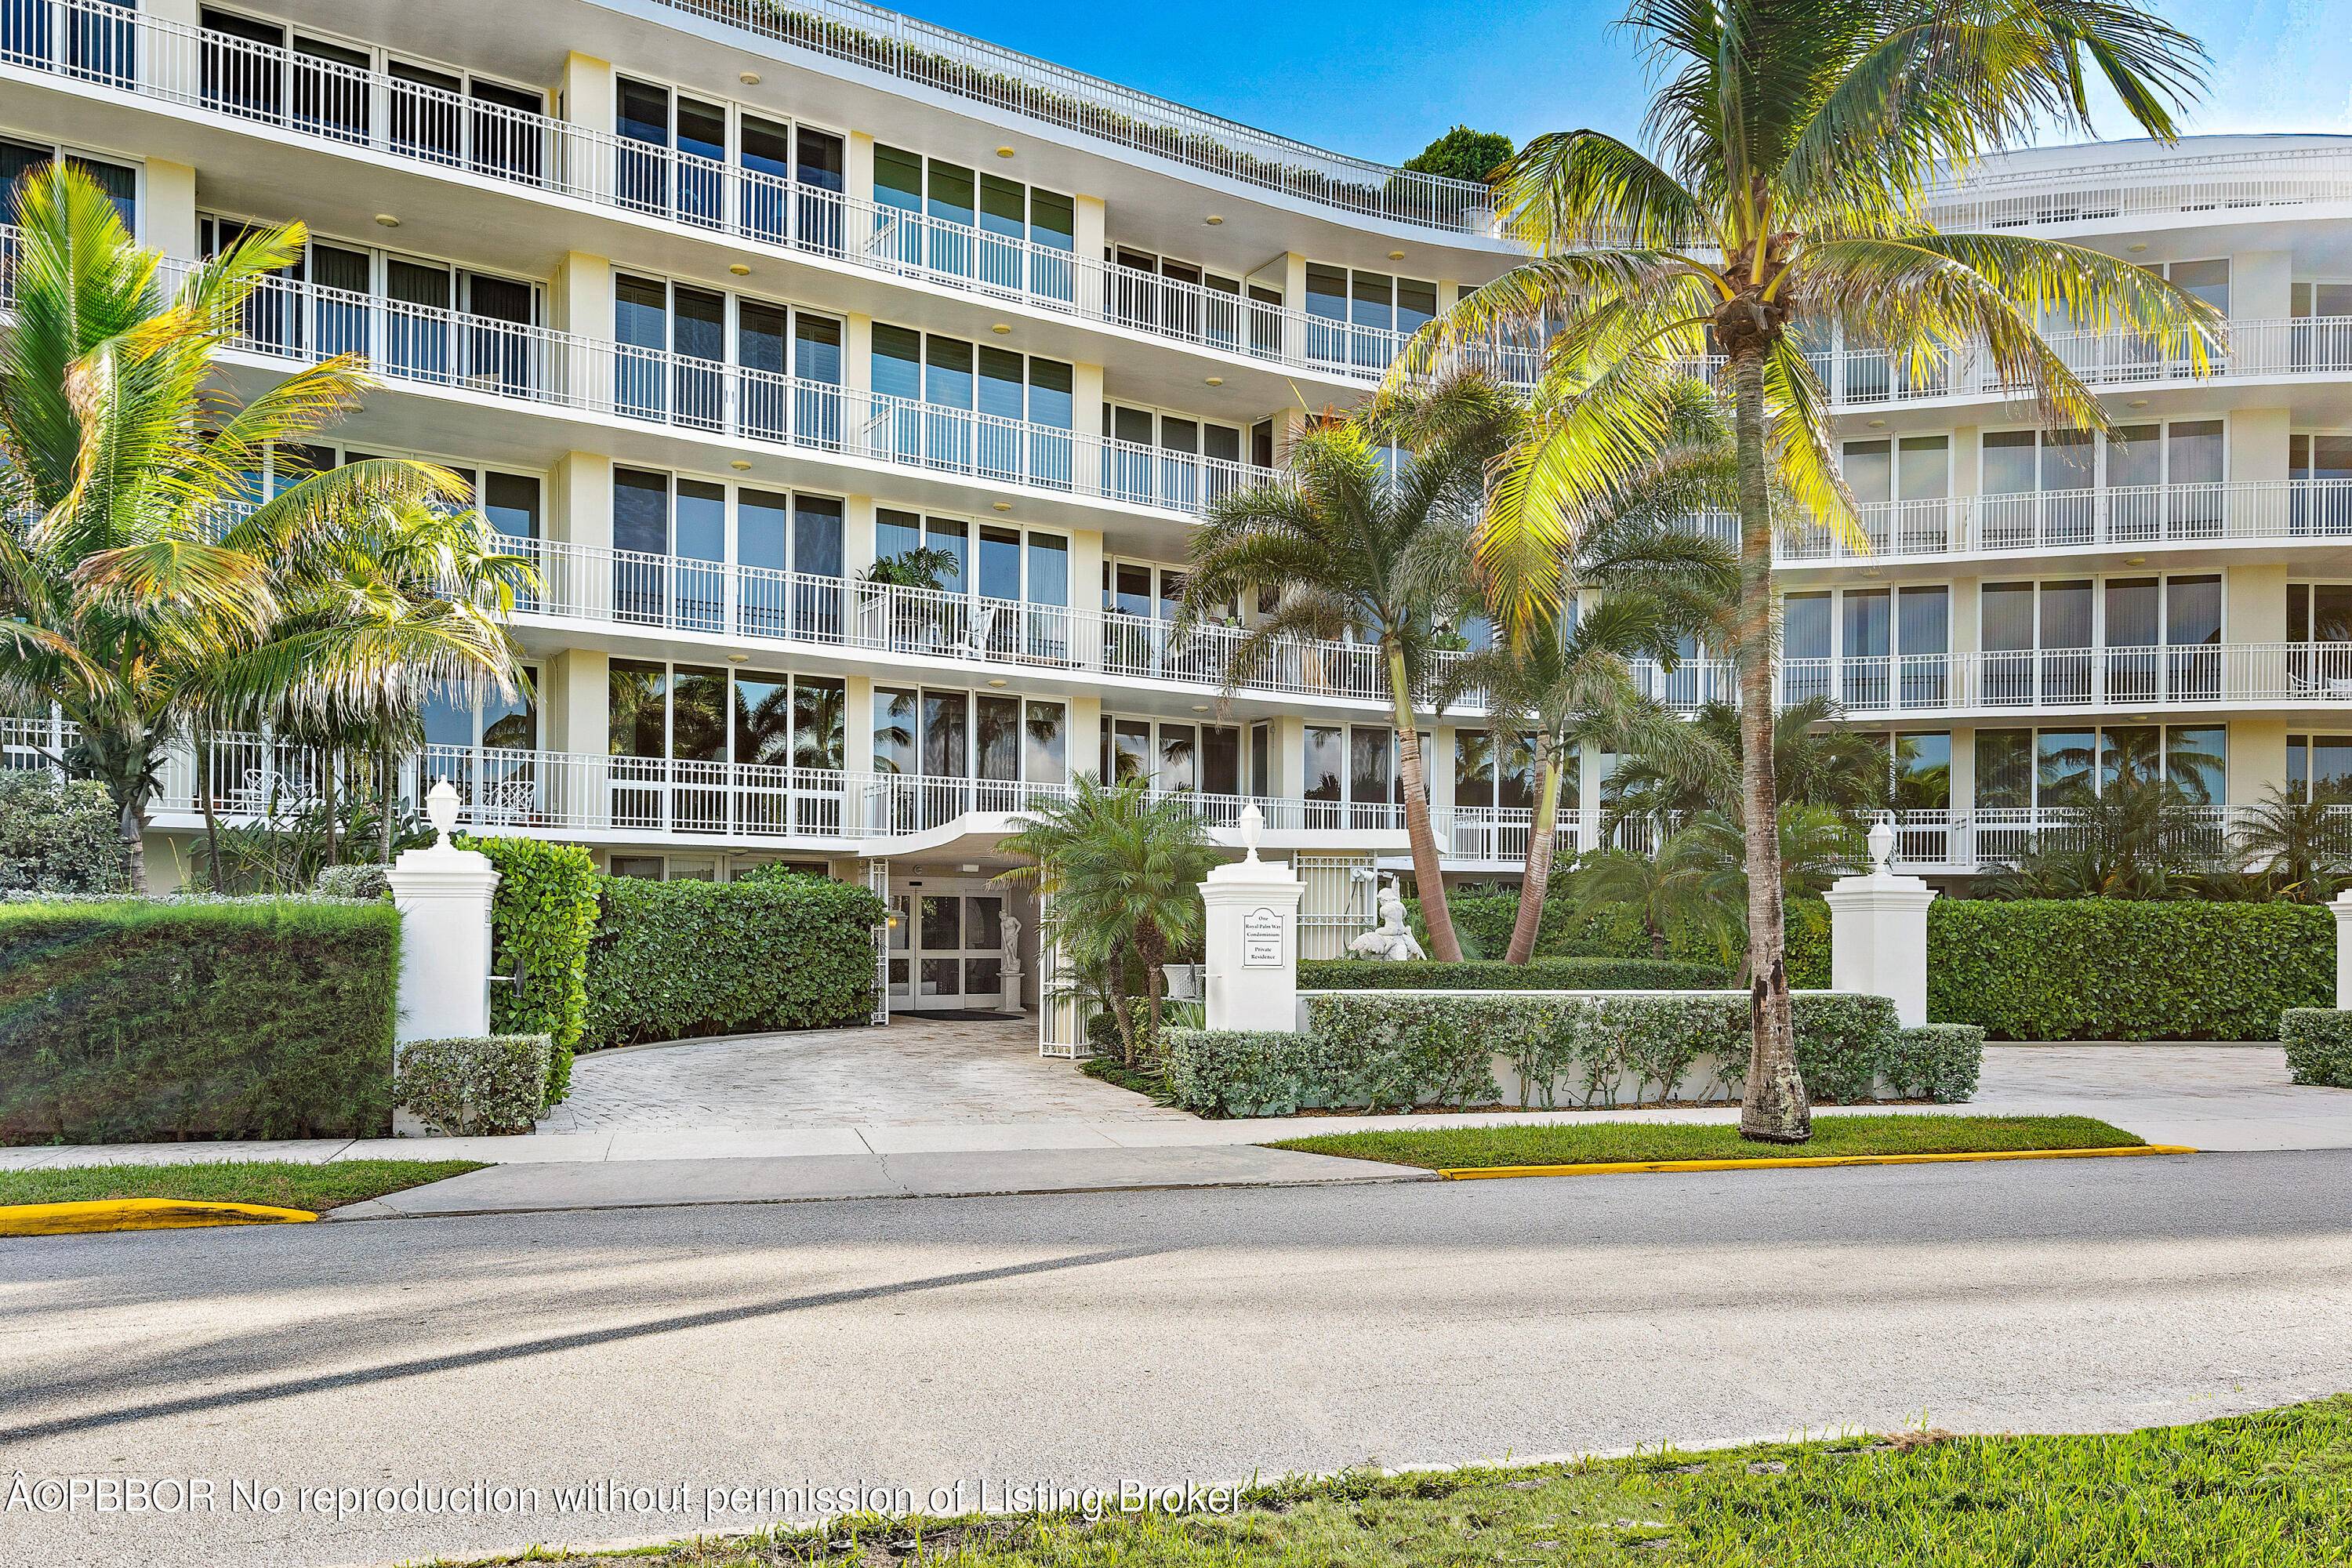 Unique opportunity to acquire a premier building garden condo located in the heart of Palm Beach.